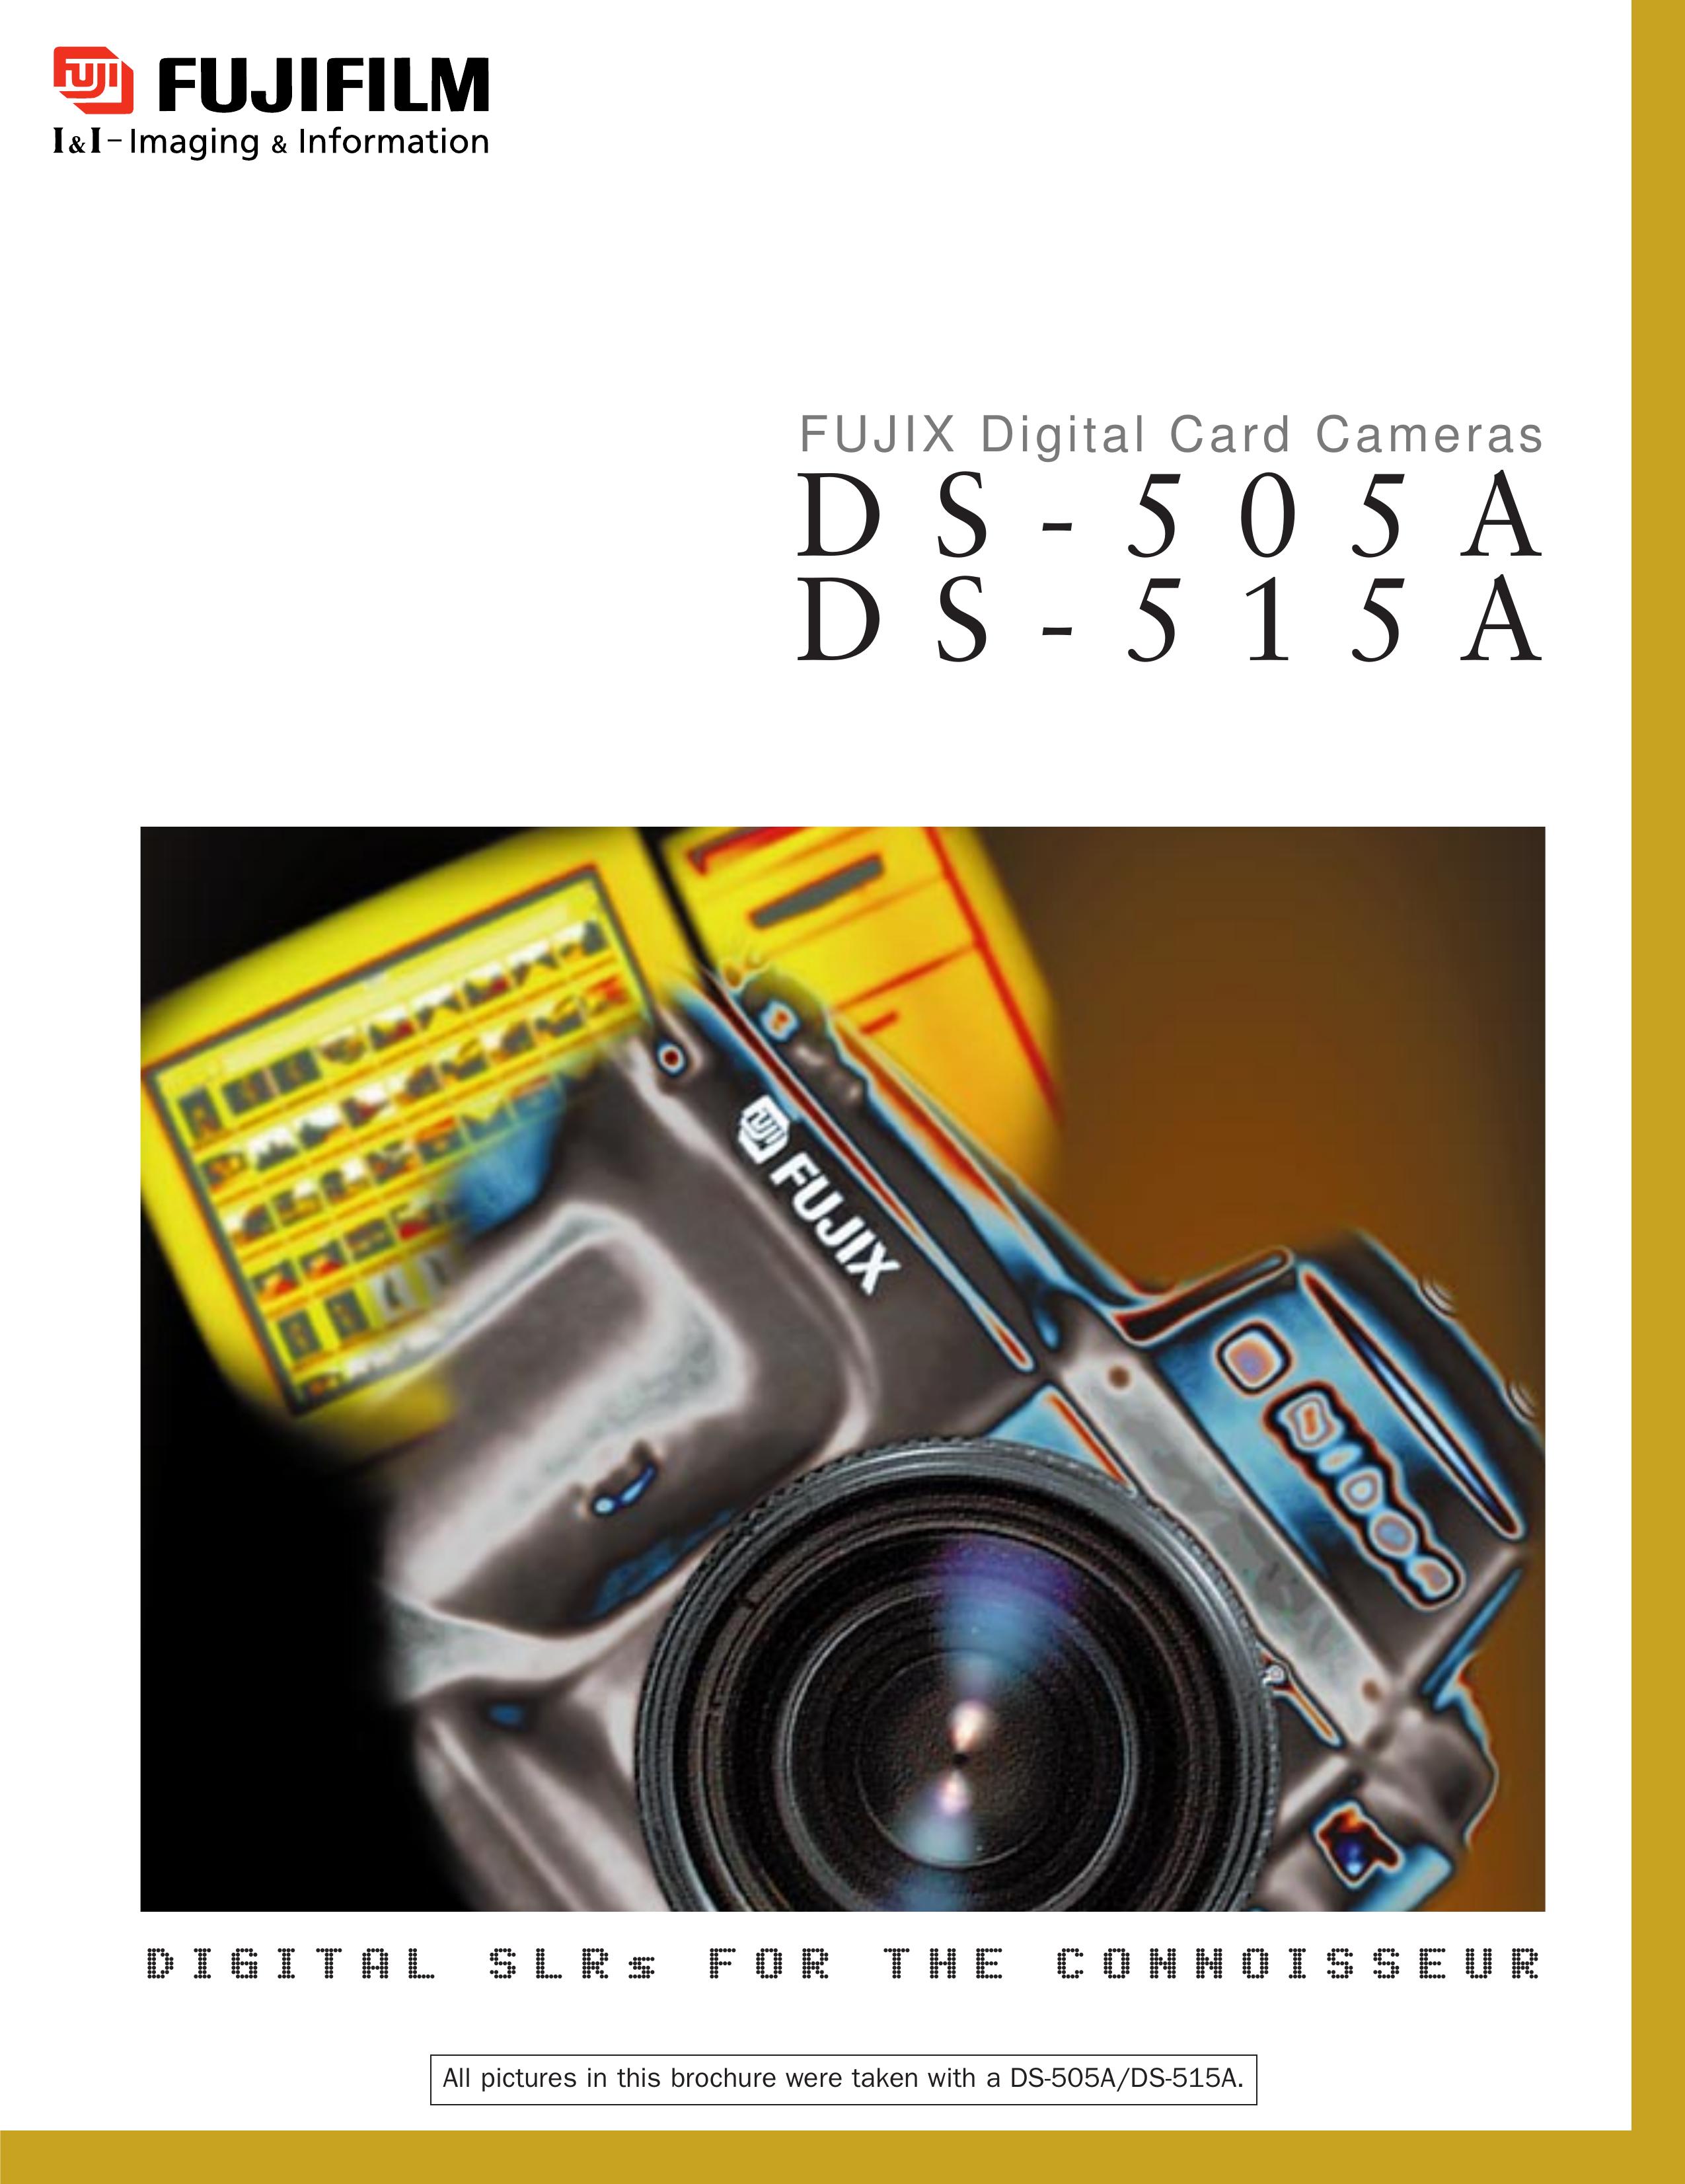 FujiFilm DS-505A Camera Accessories User Manual